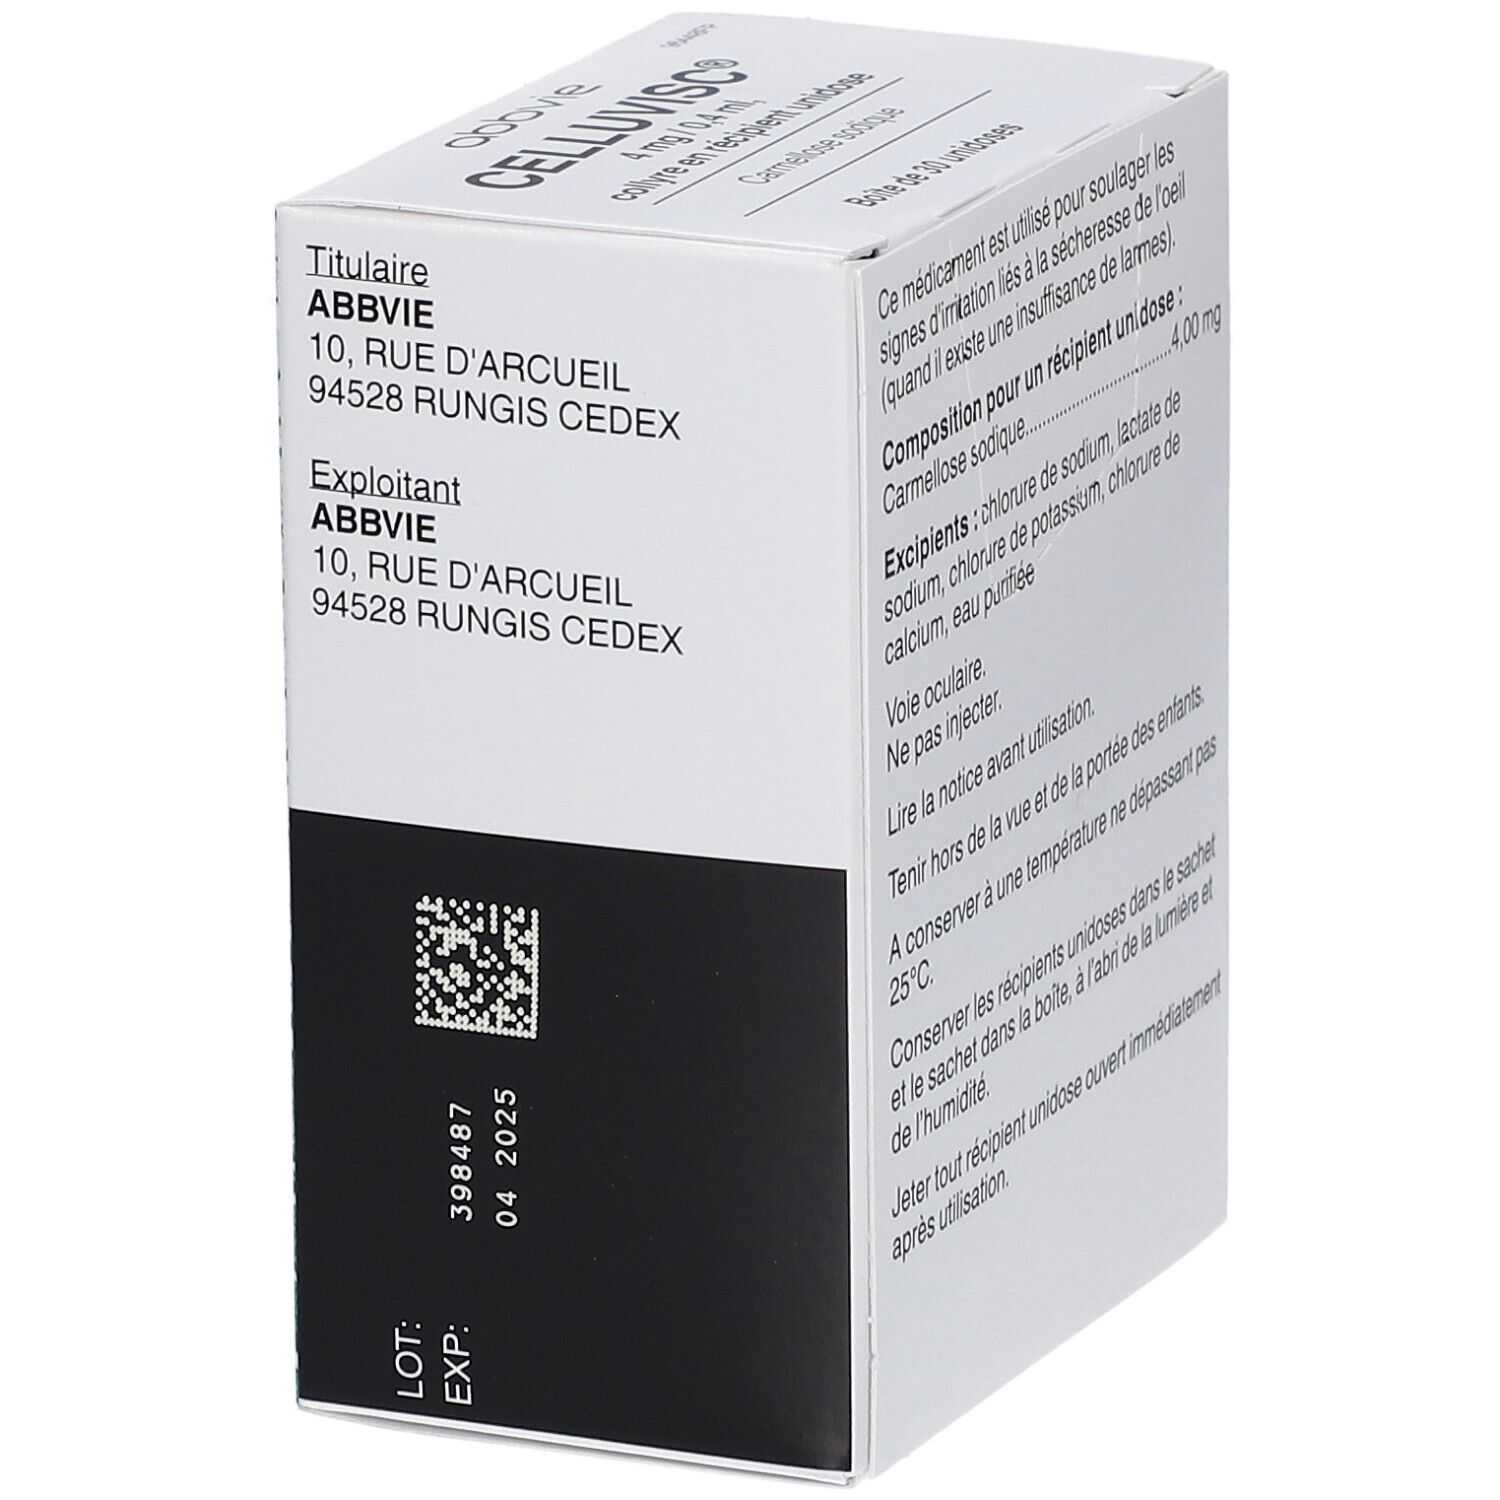 Allergan Celluvisc® 4 mg/0,4 mL